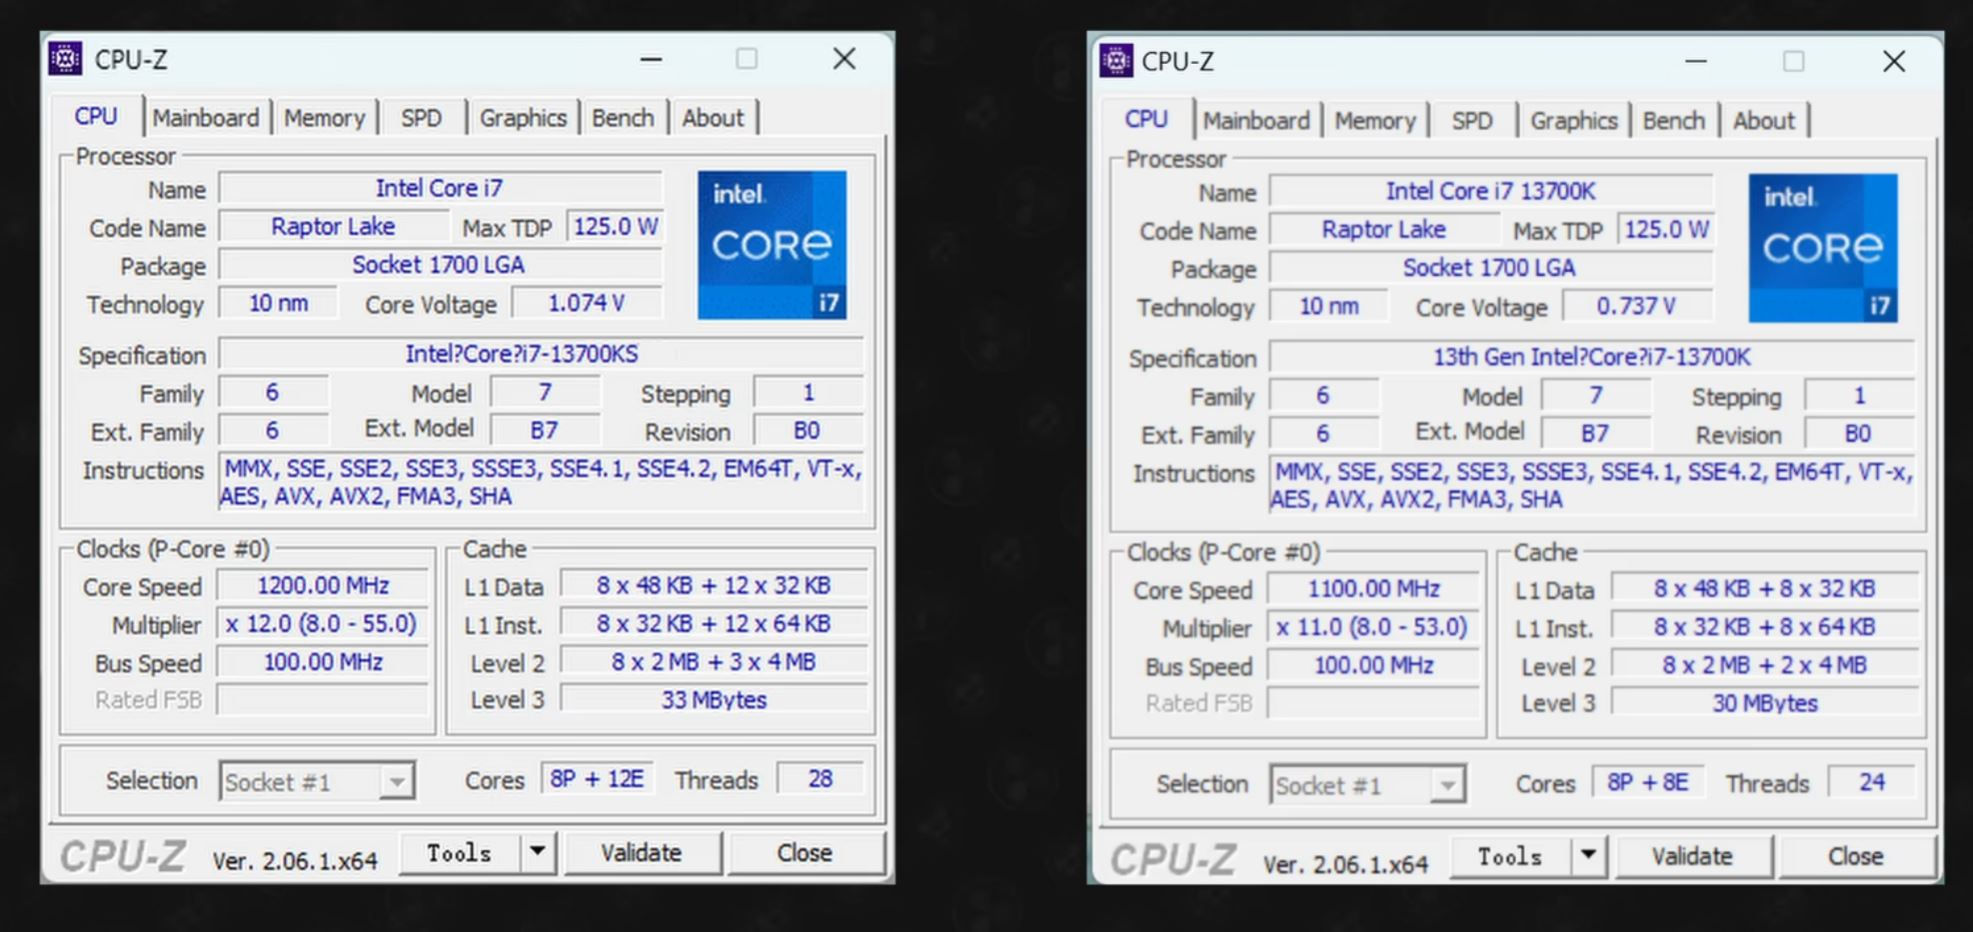 Intel Core i7 14700K vs Ryzen 7 7700X - second tier tussle - PC Guide